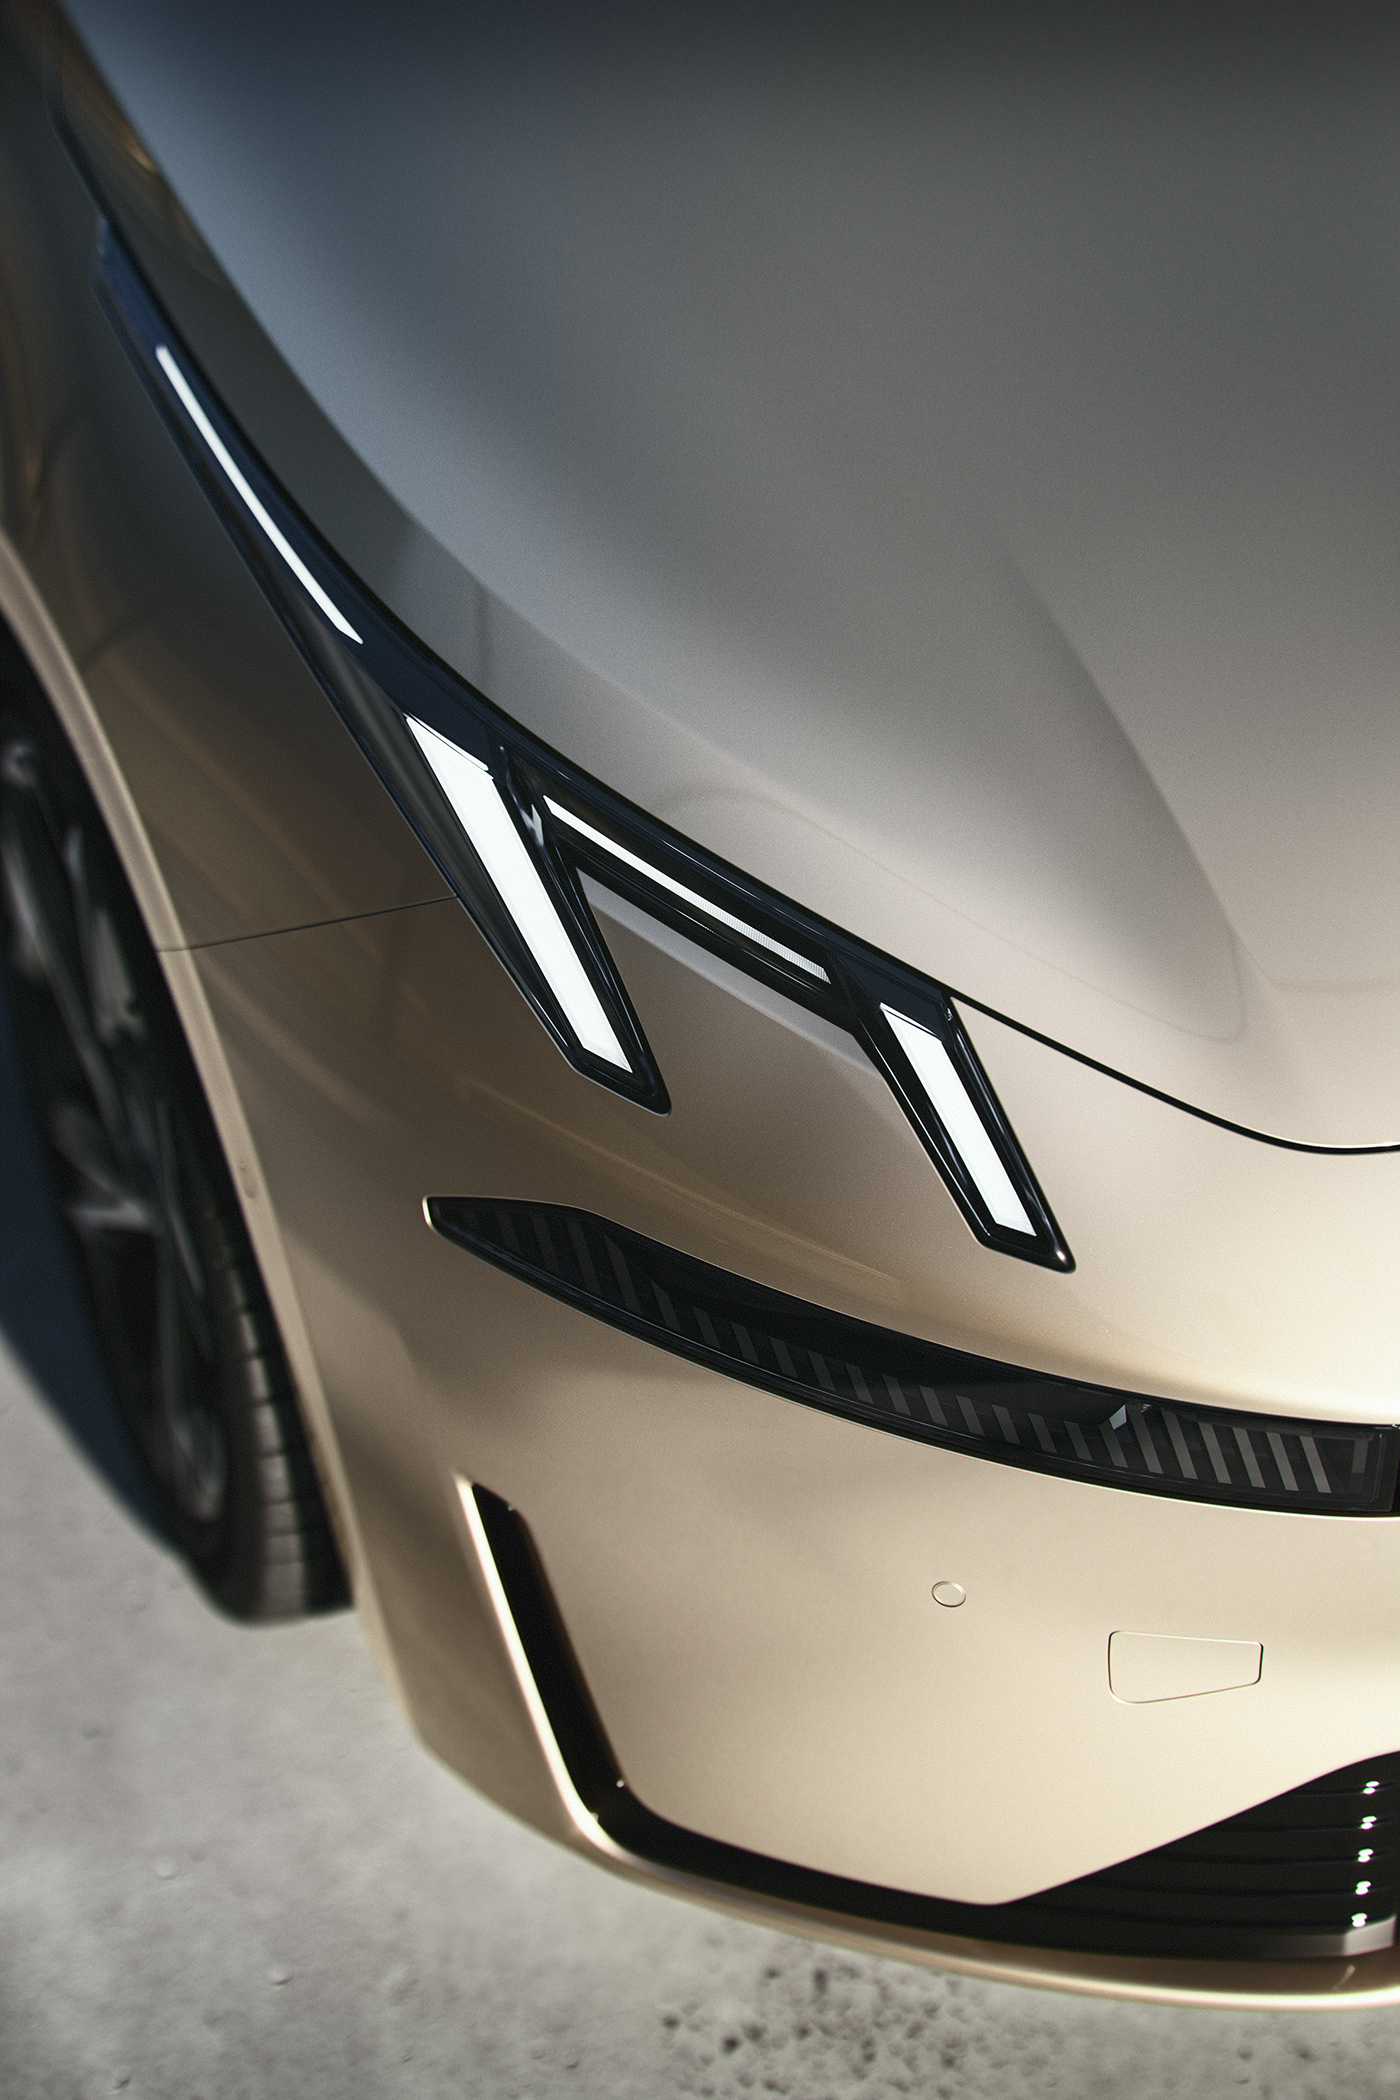 vray fullcgi automotive   3D visualization Render car marketing   3ds max vray gpu